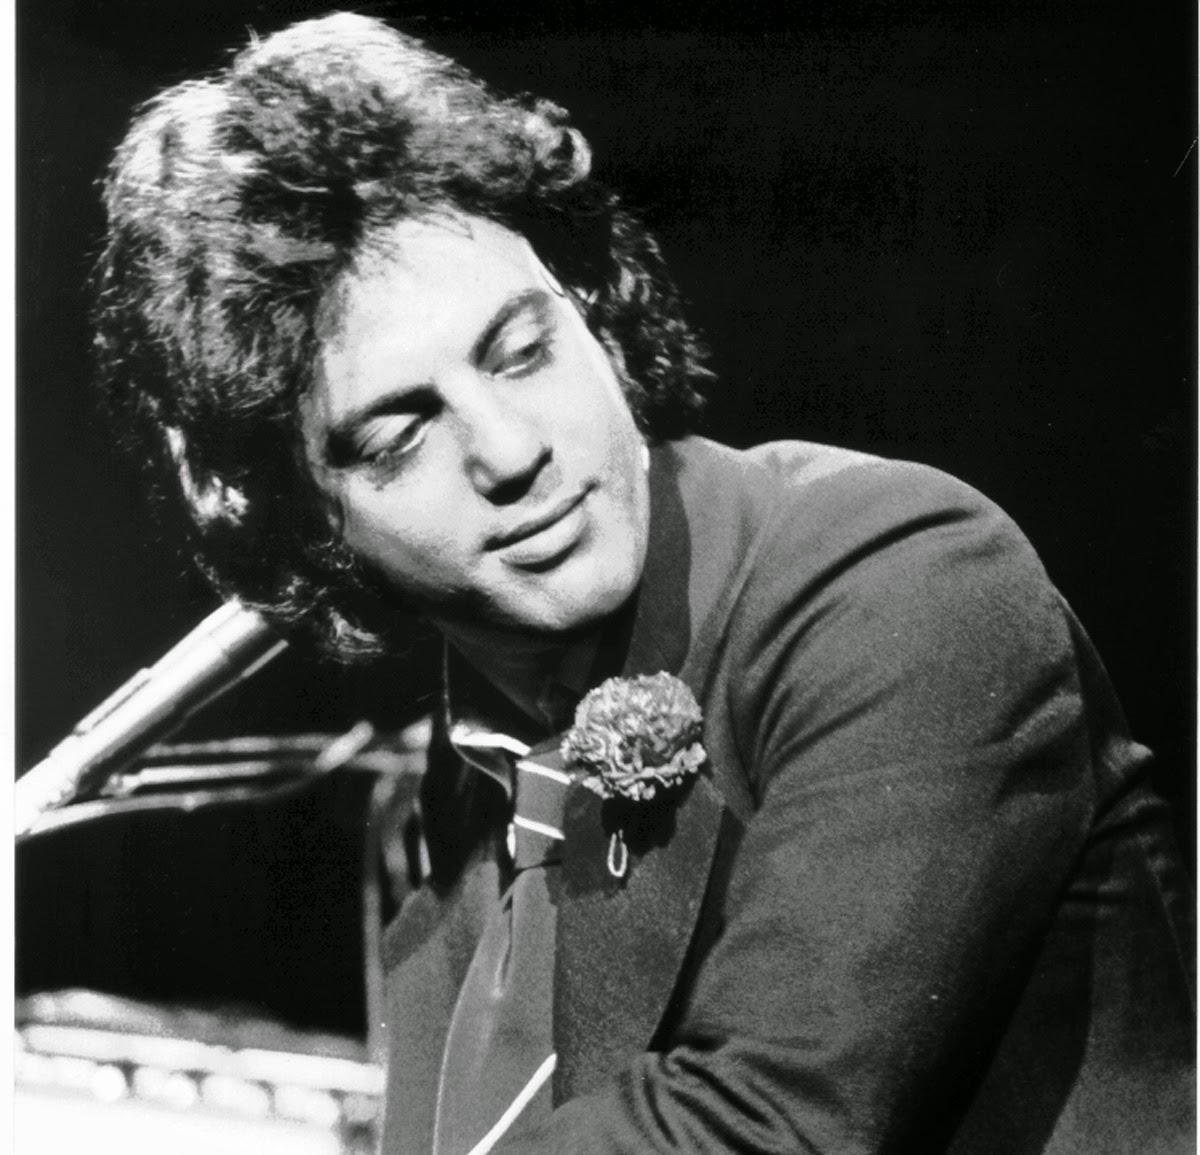 Billy Joel: Live From Long Island [1983 Video]